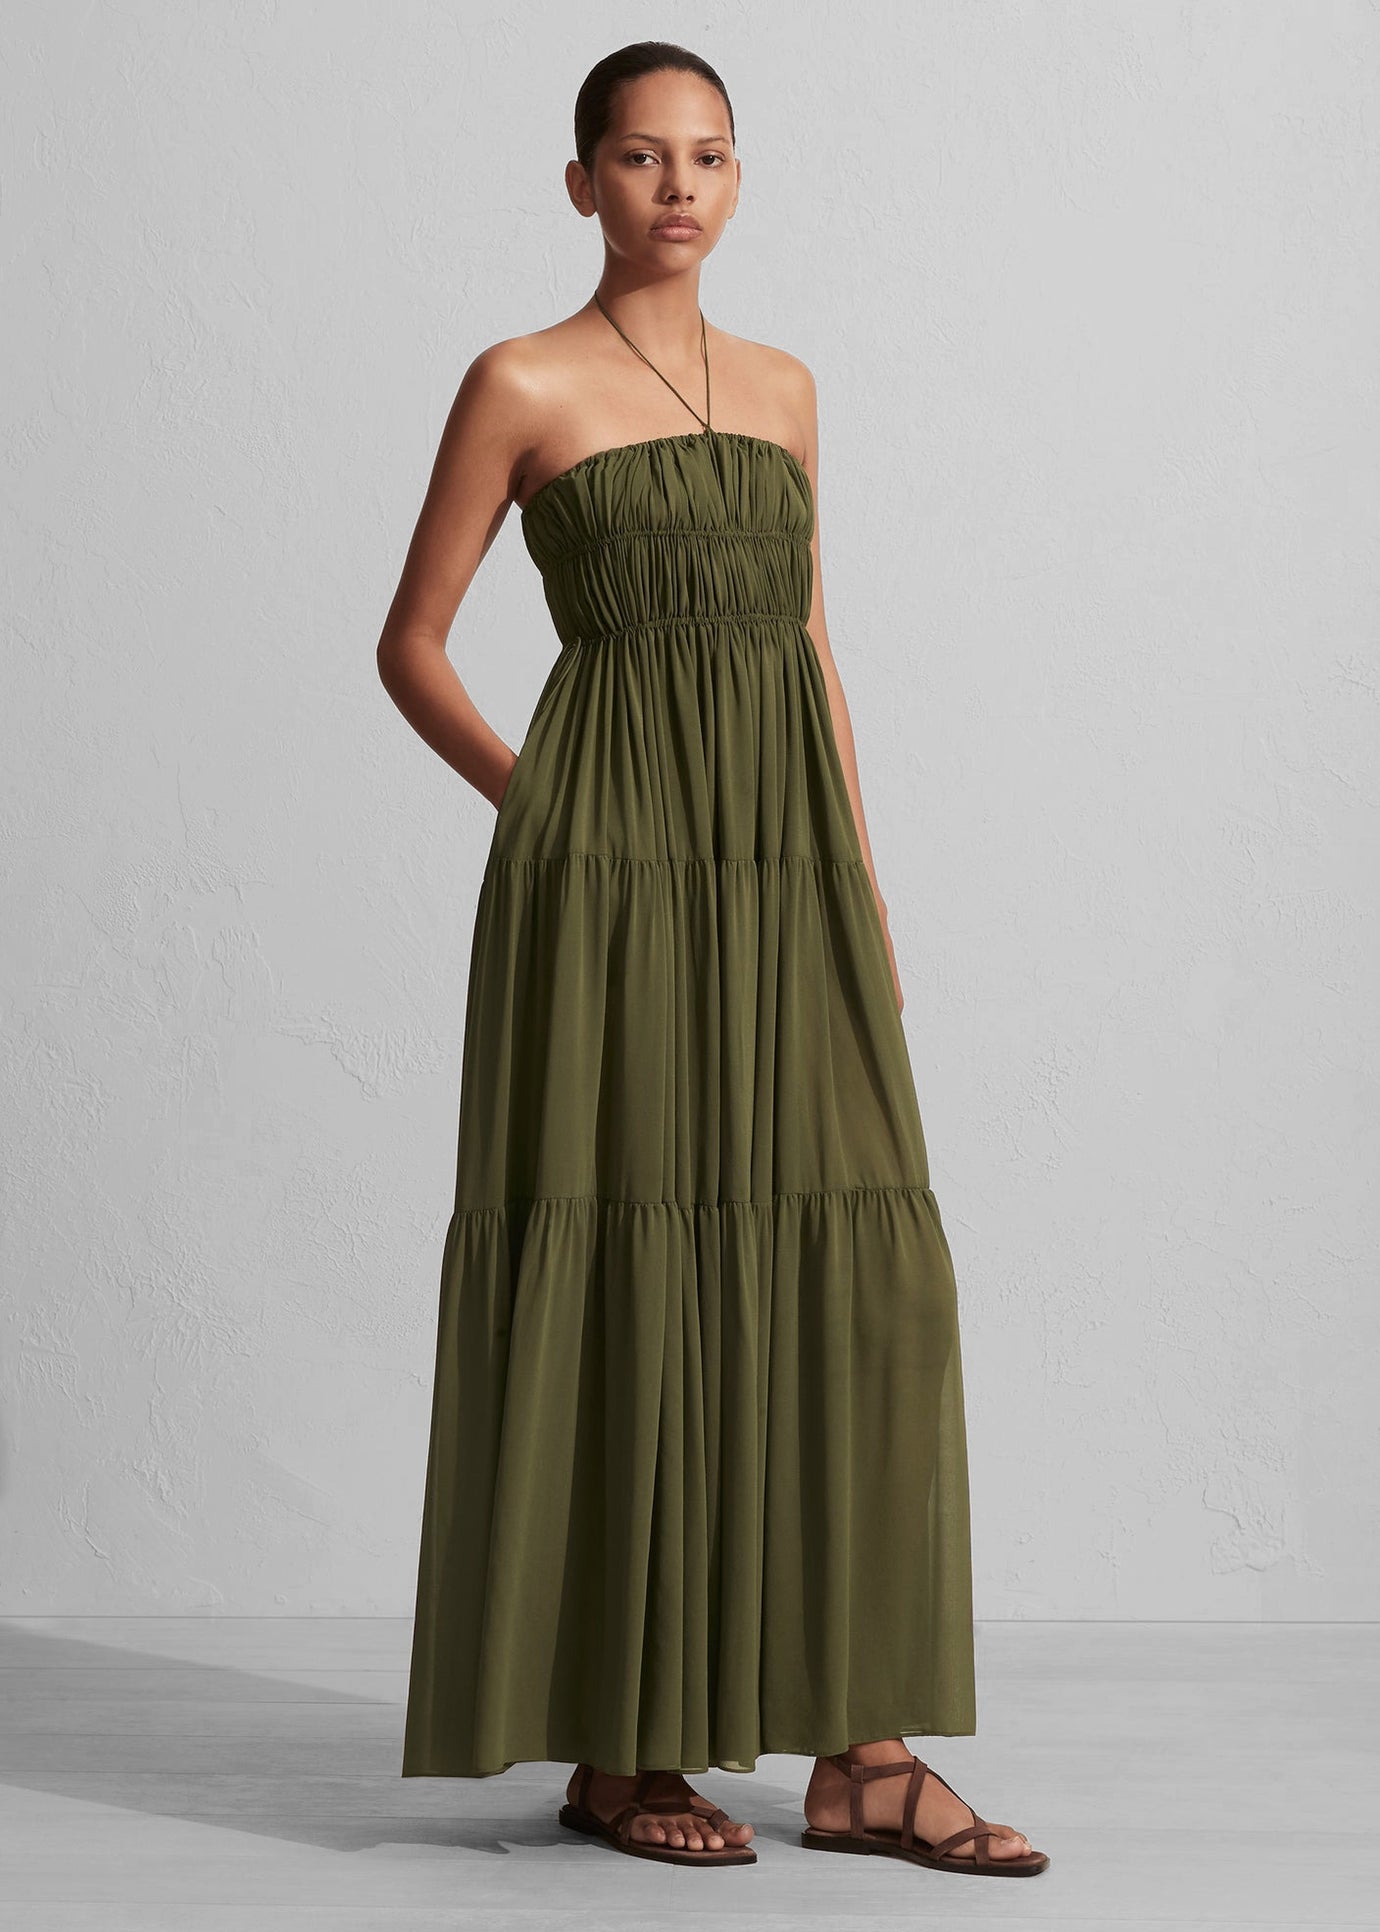 Matteau Shirred Halter Dress - Cypress - 1